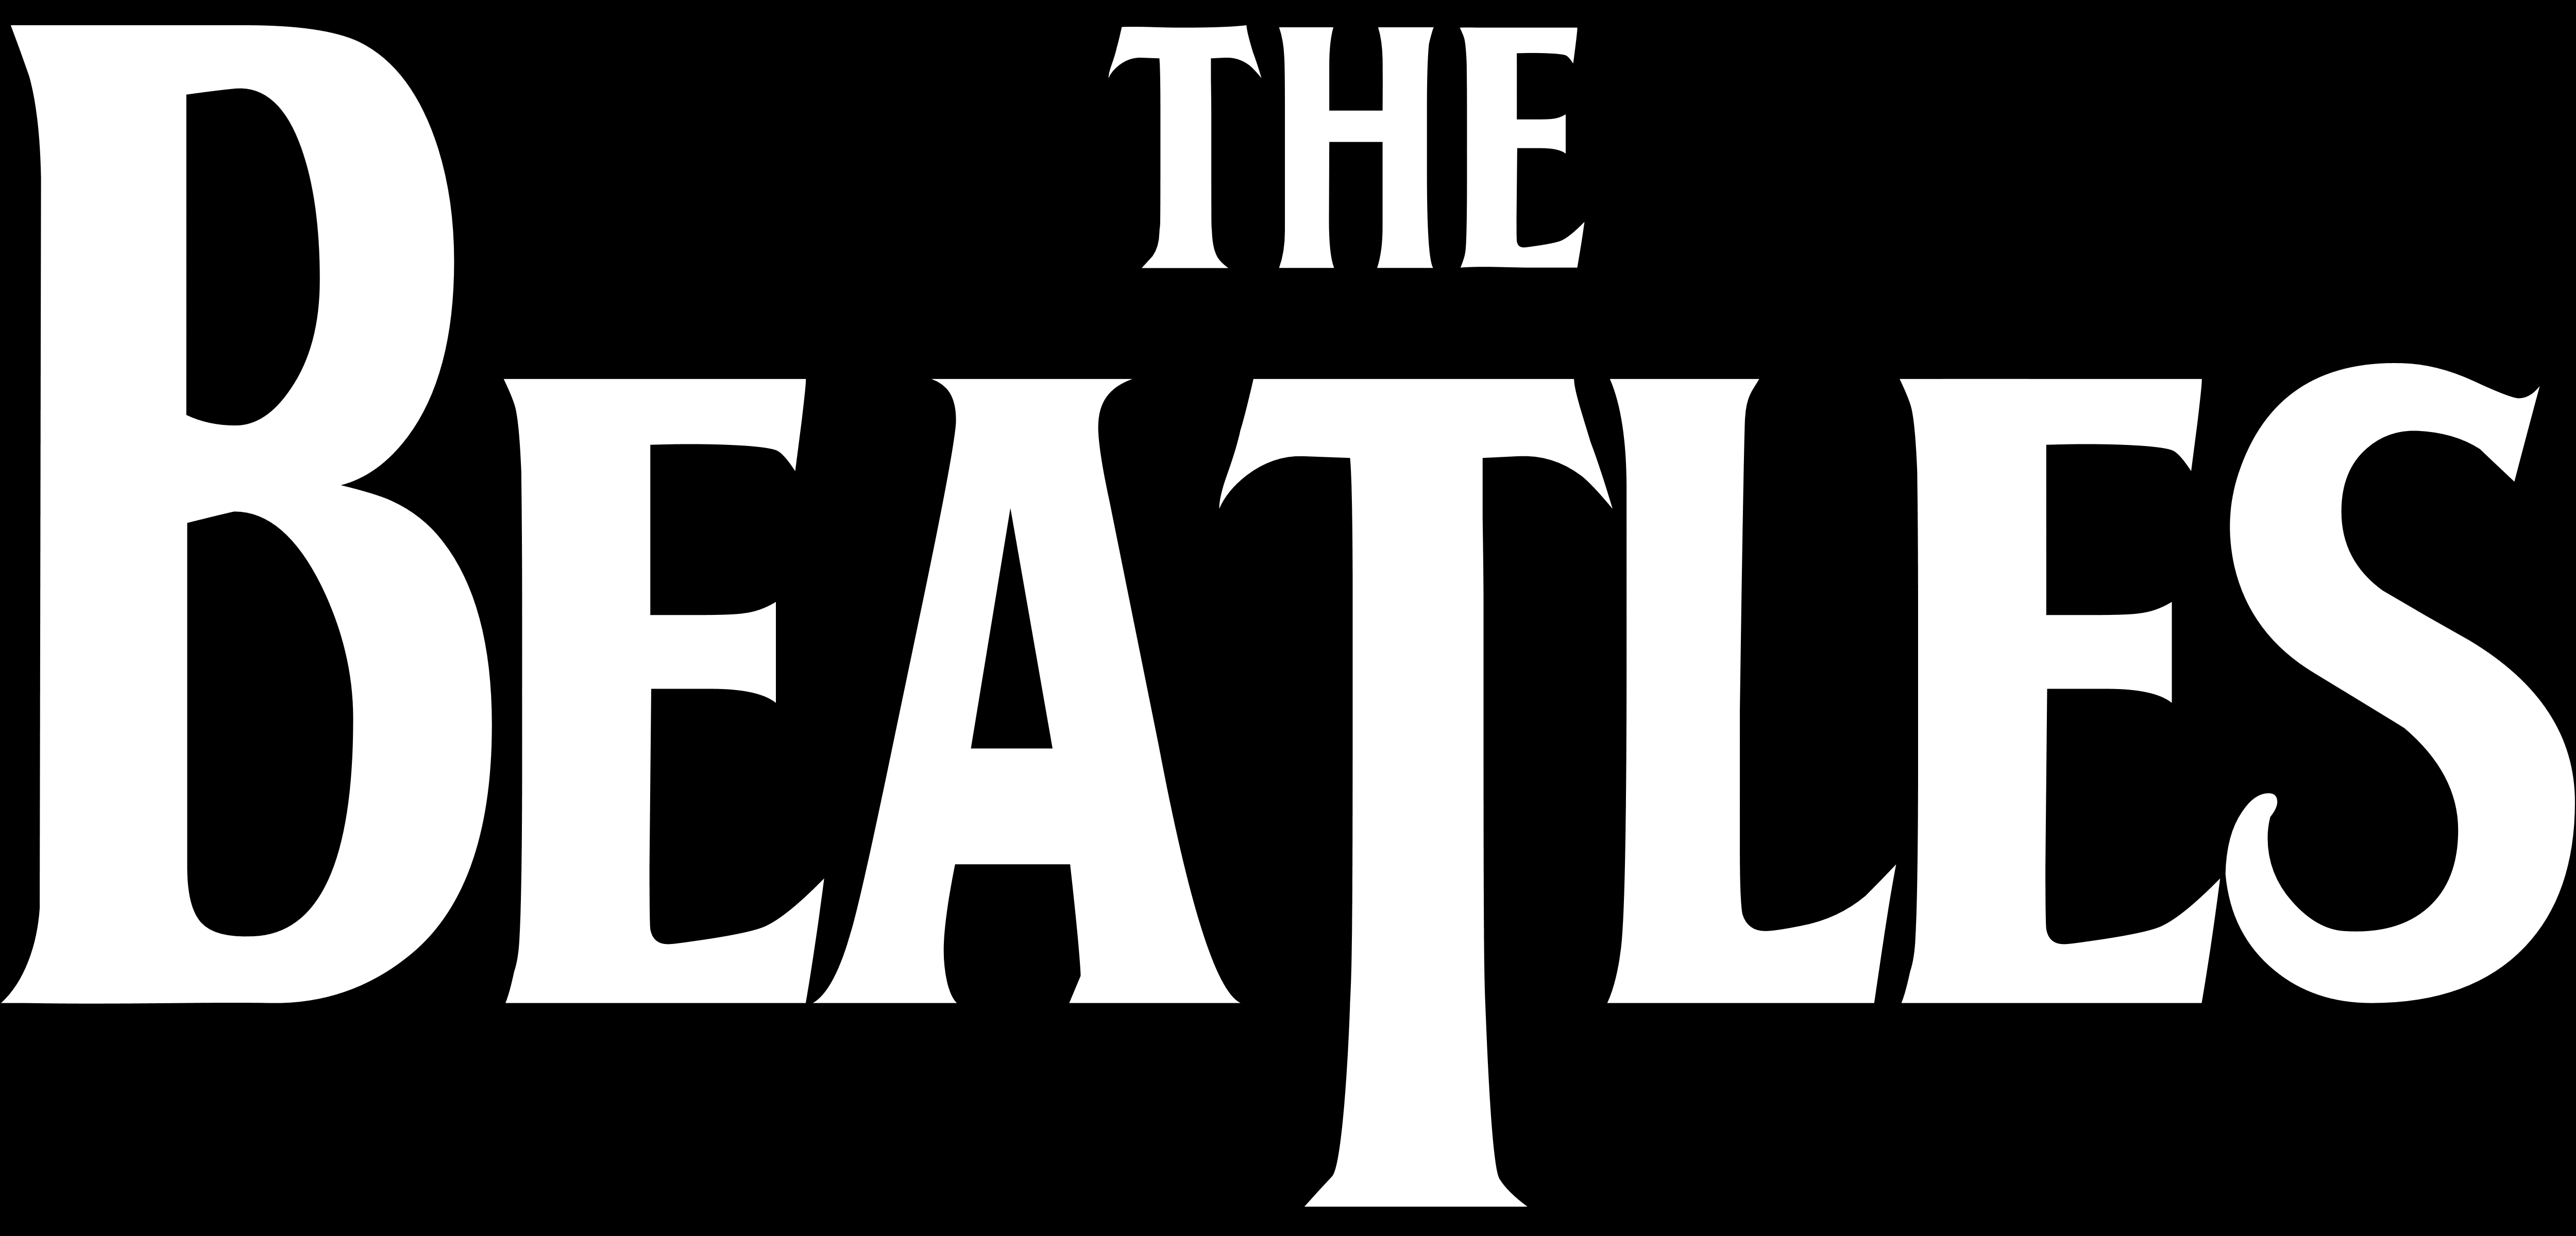 The Beatles Logos Download